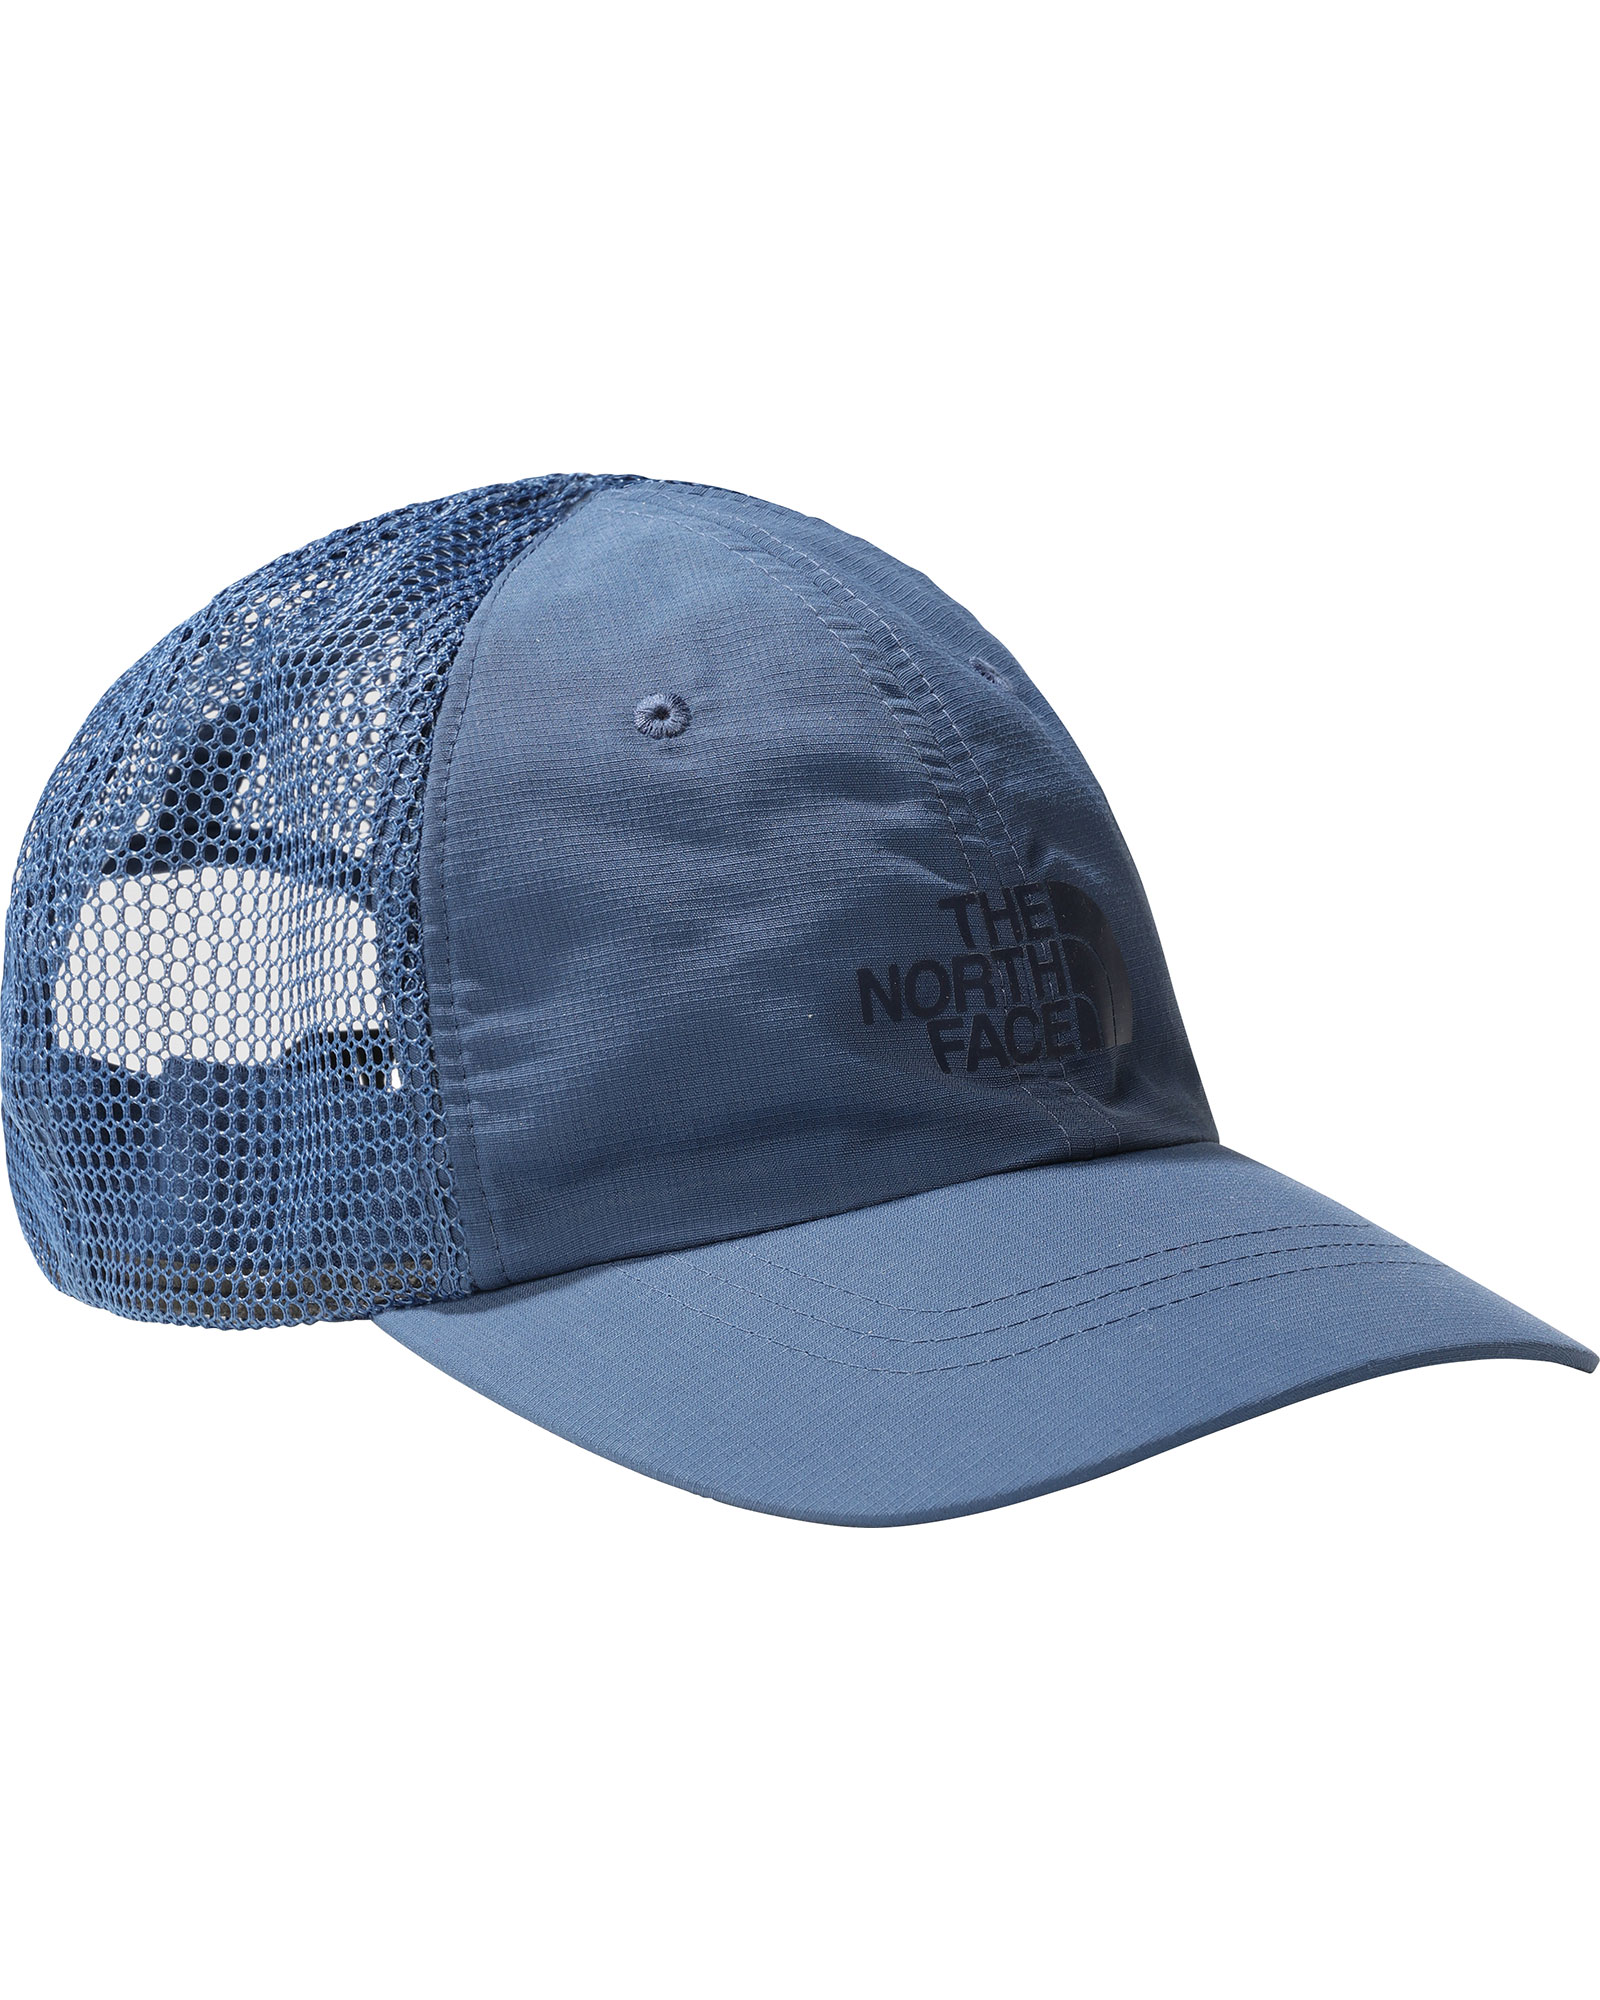 The North Face Horizon Trucker Hat - Shady Blue